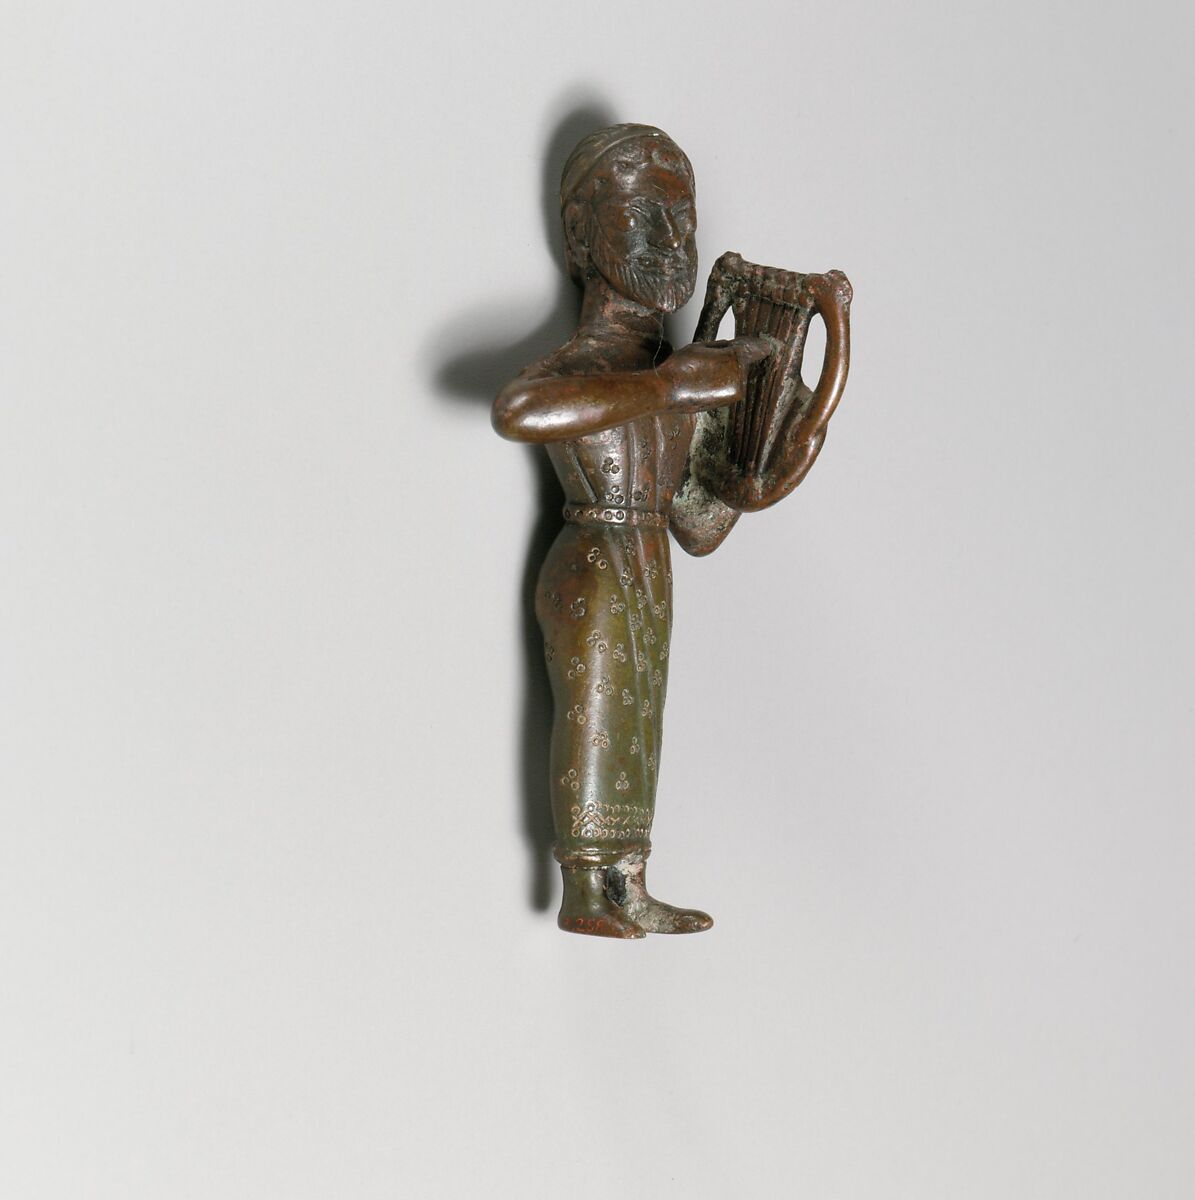 Statuette of a harp (lyre) player, male, Bronze, Greek